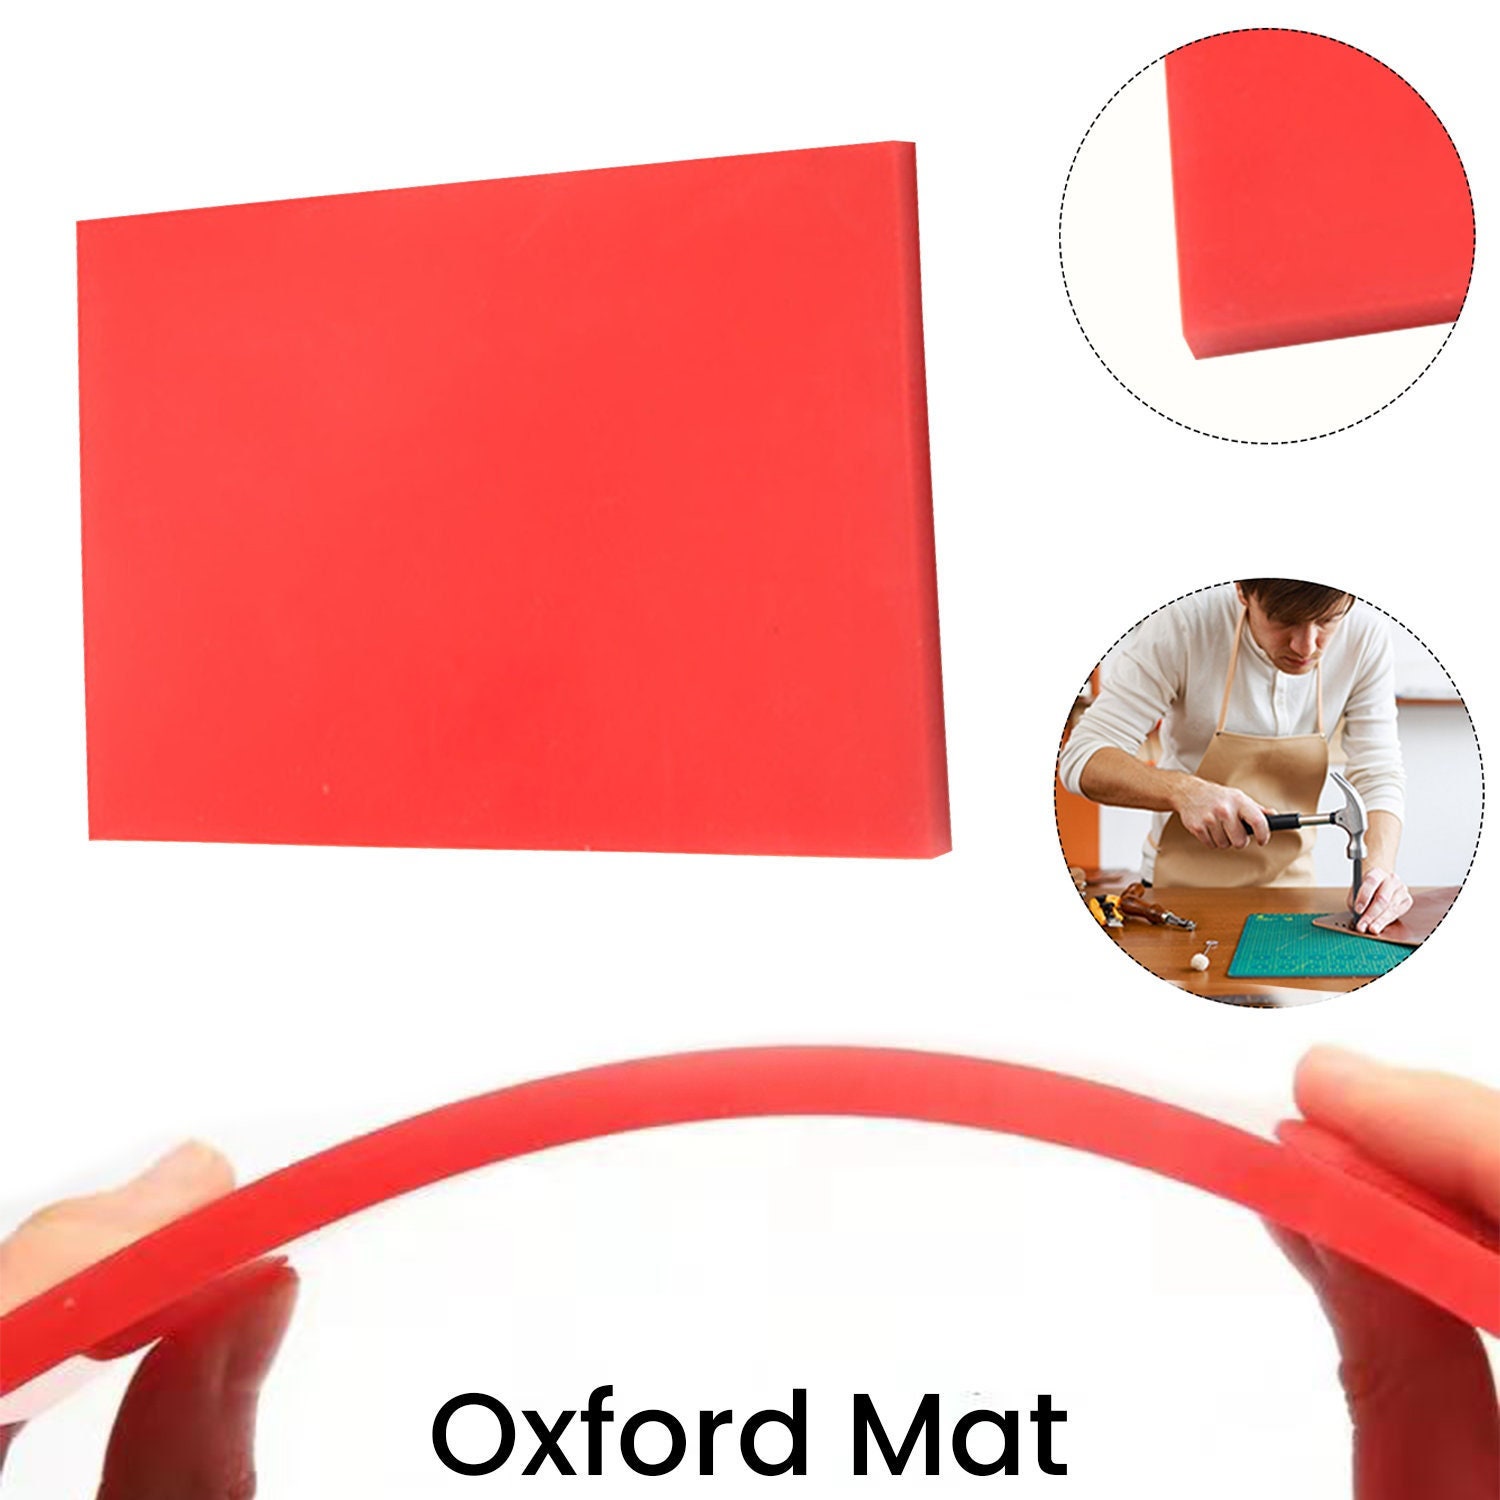 PVC Grid Mat Cutting Mat Patchwork Craft Mat Pad Leather Fabric